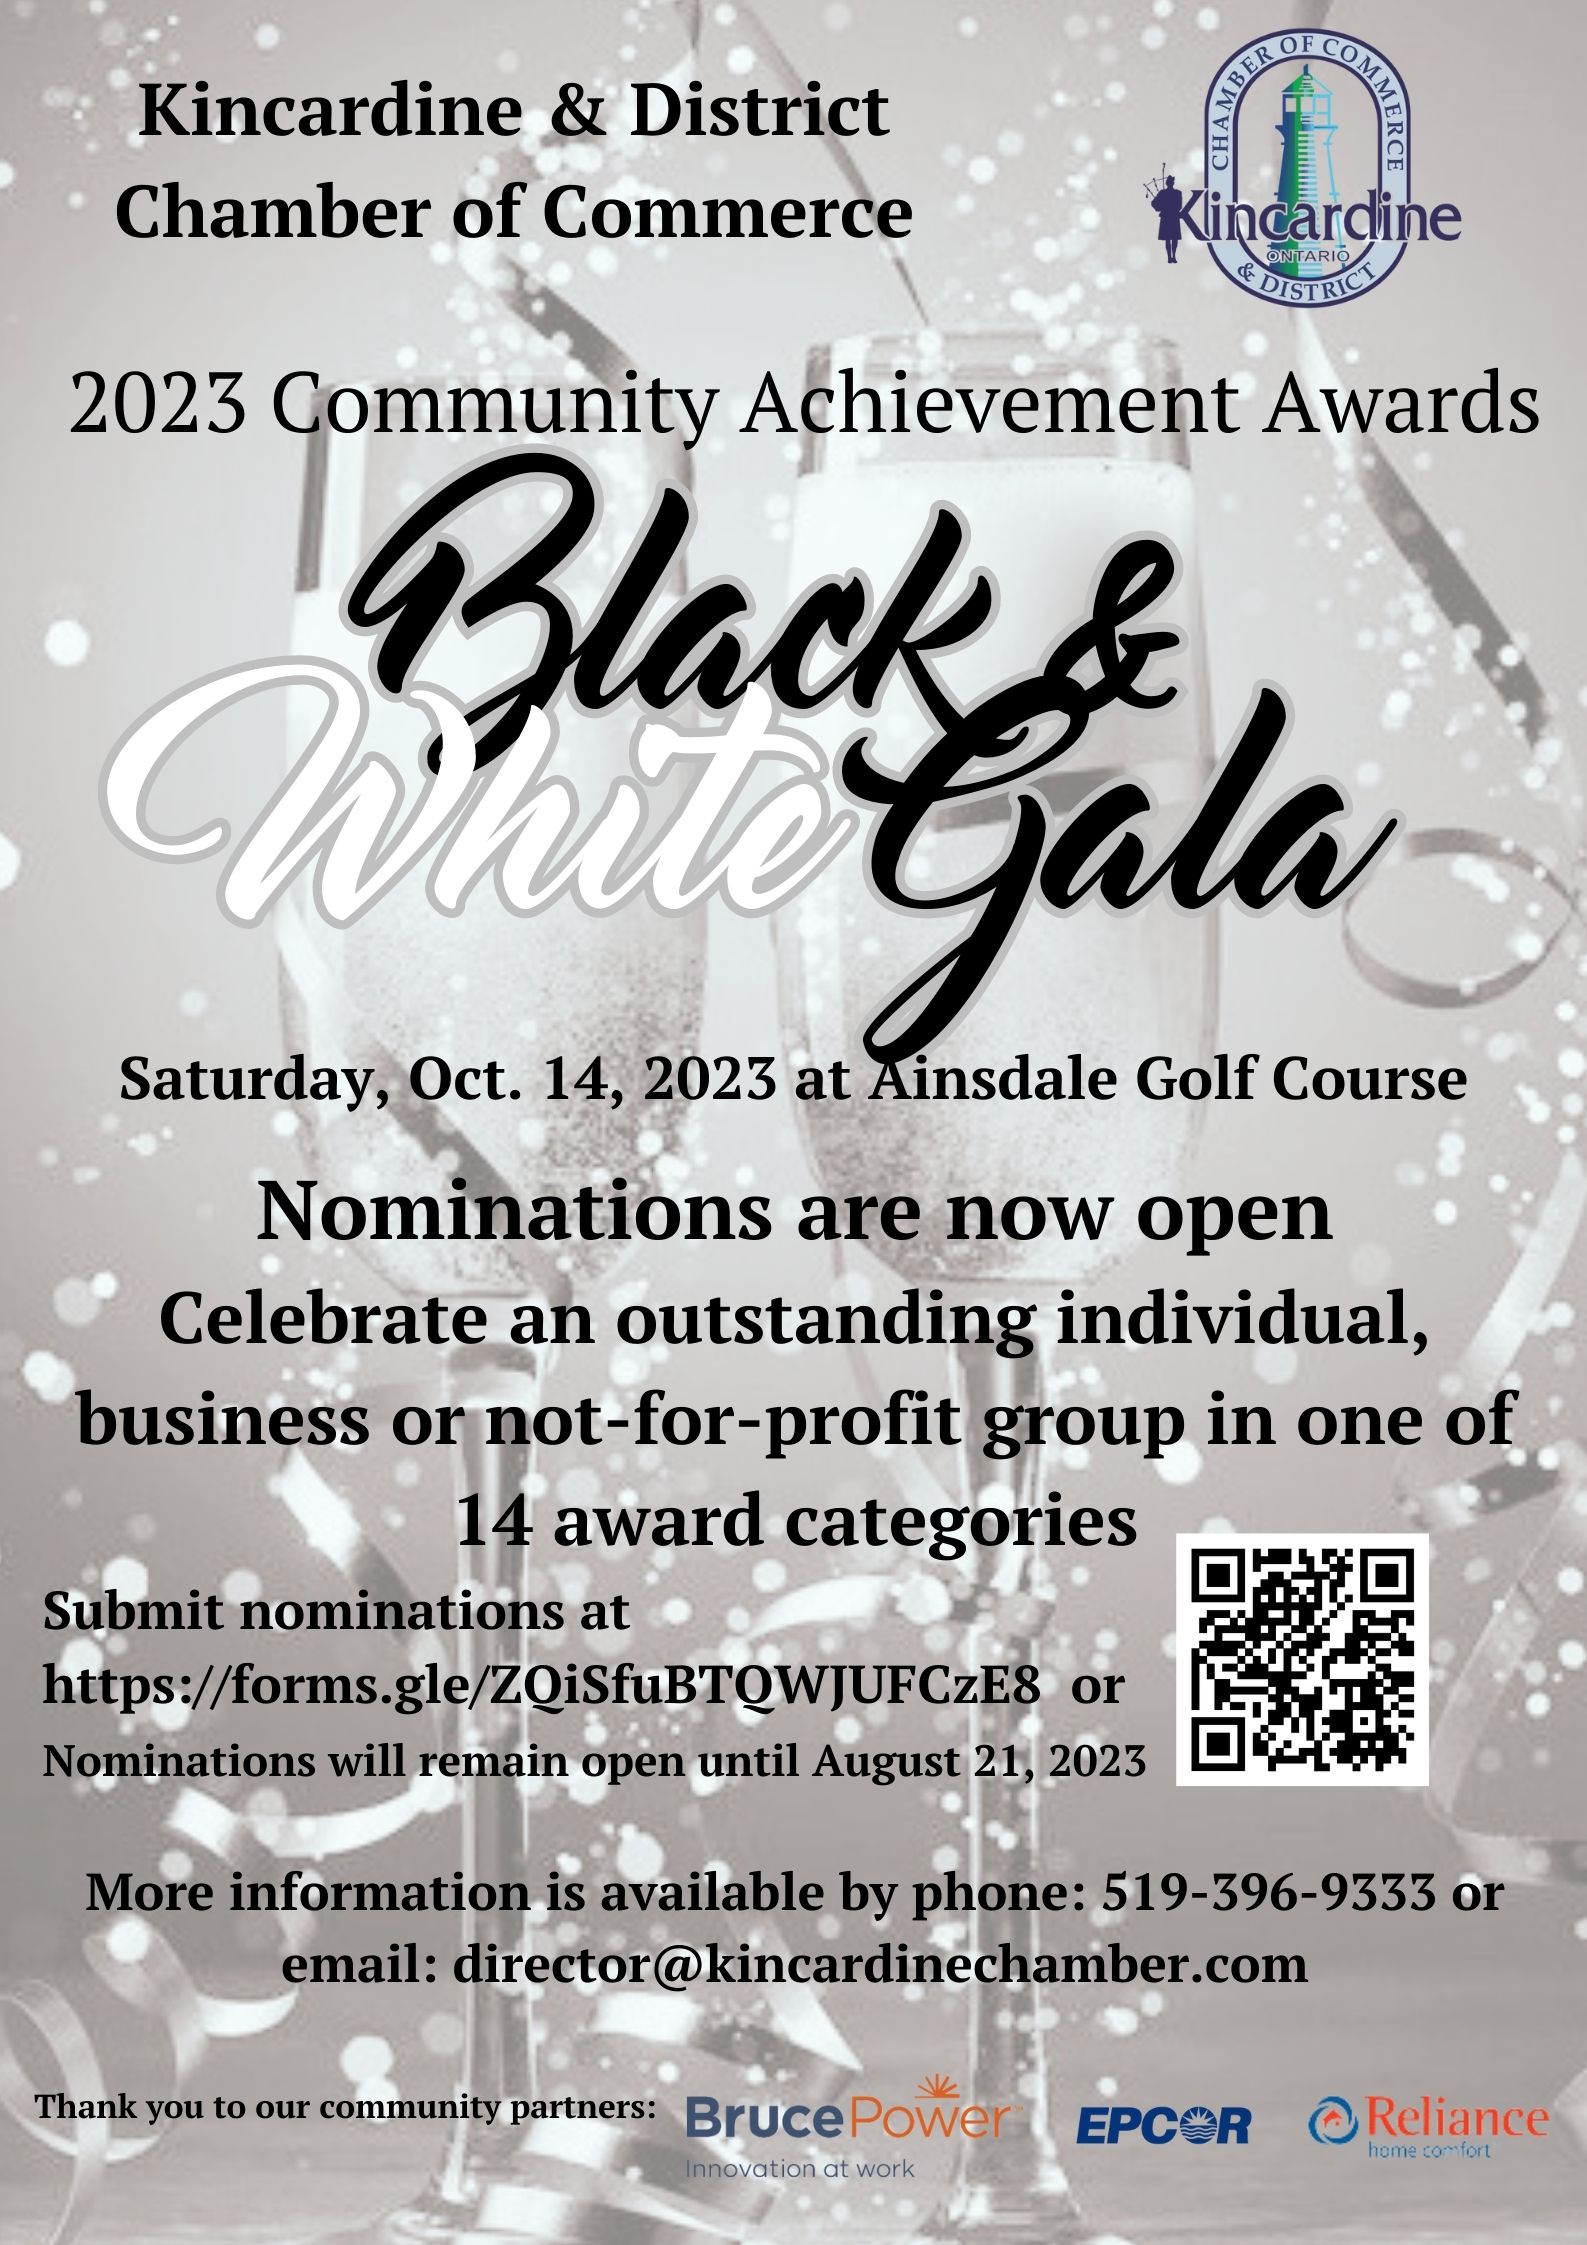 Kincardine Chamber of Commerce Community Achievement Awards Gala